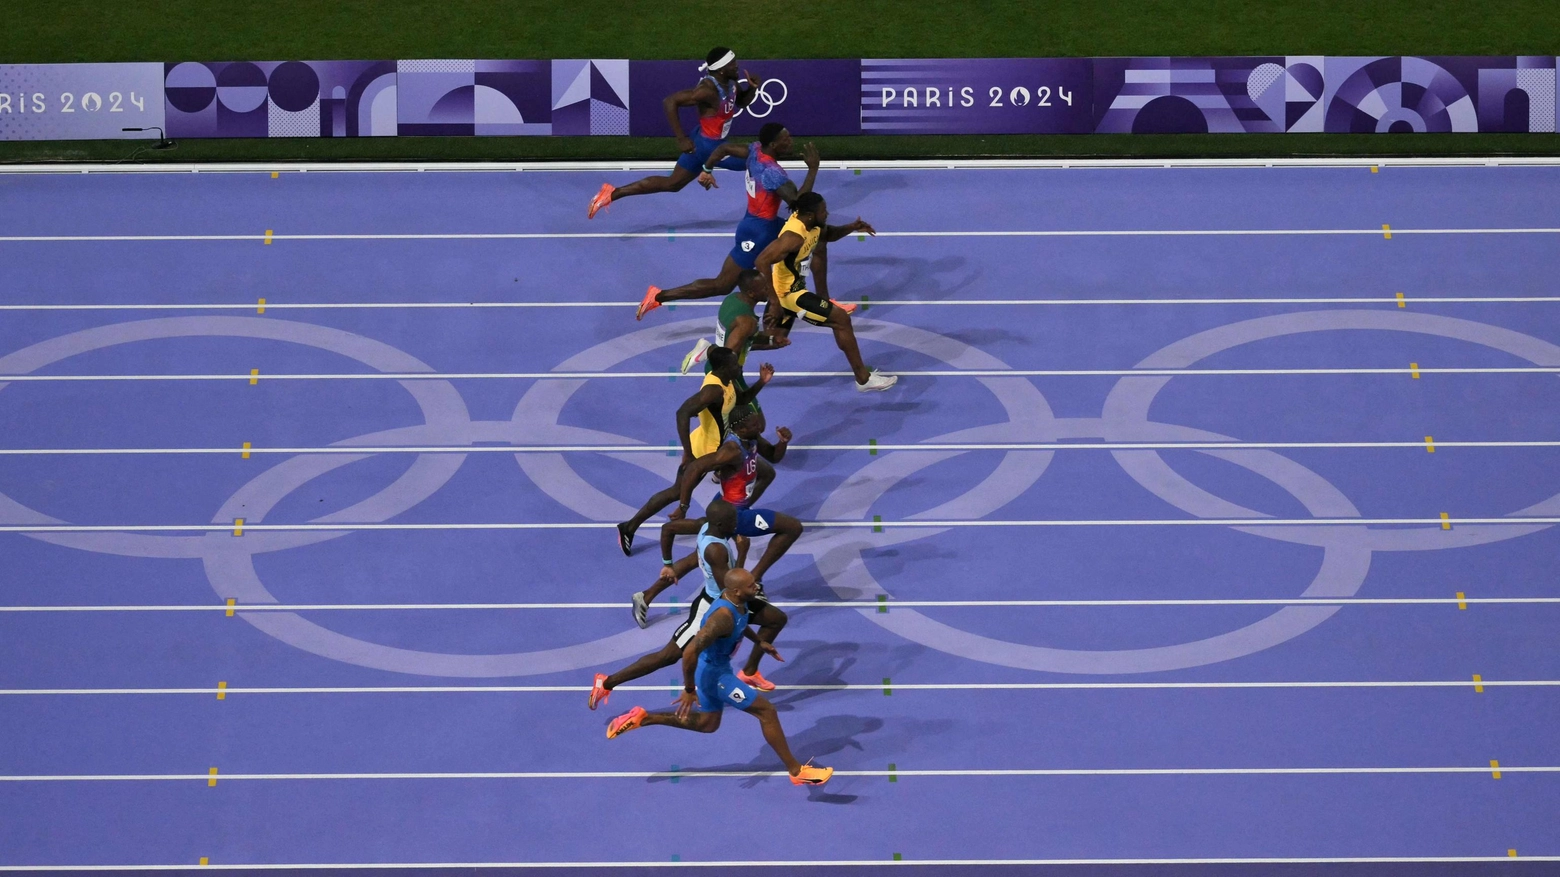 La finale dei 100 metri alle Olimpiadi di Parigi 2024 (Ansa)